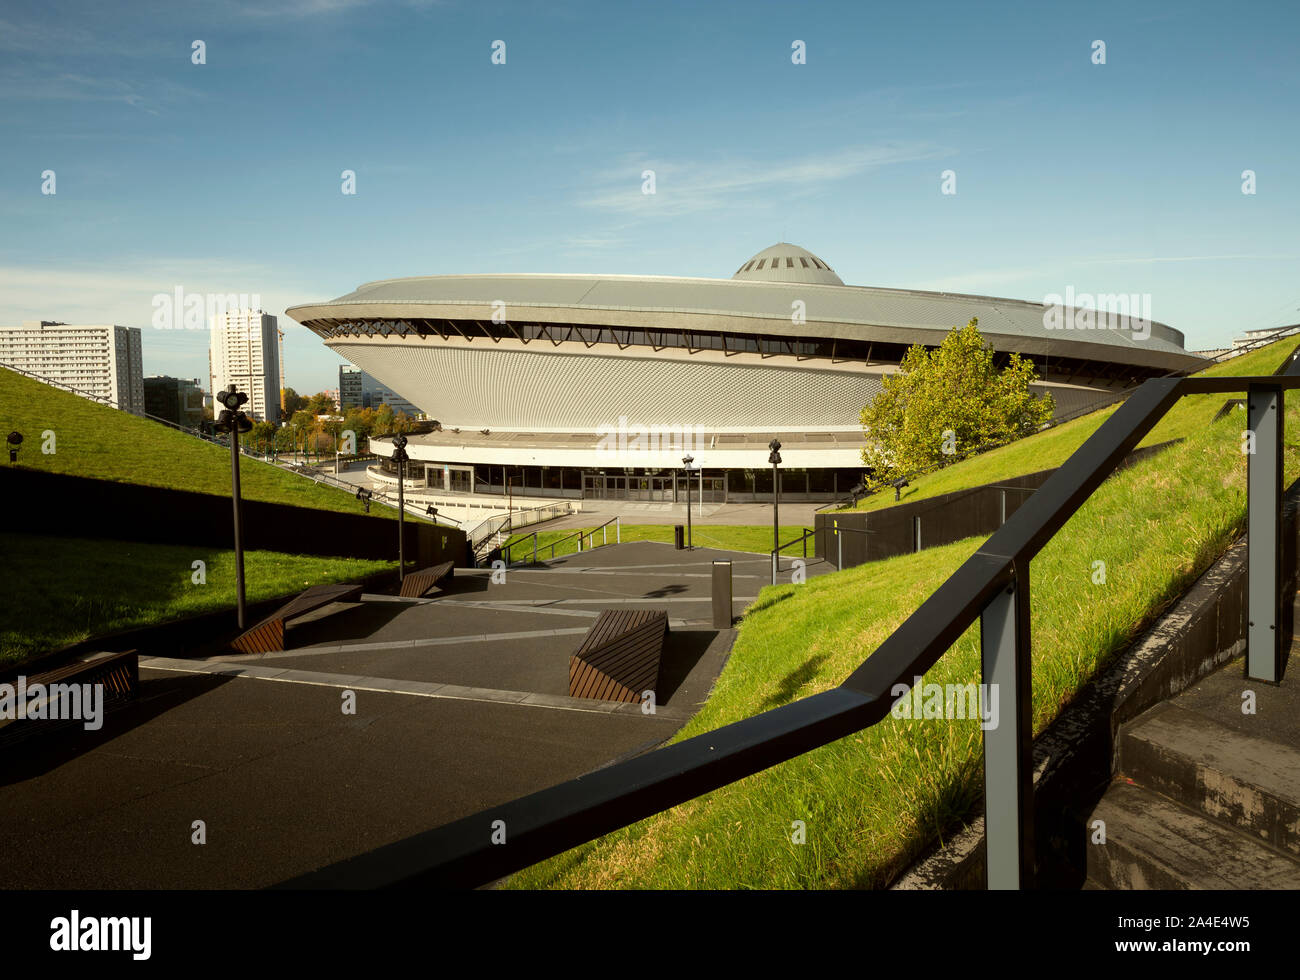 The saucer sport arena in Katowice city, Poland Stock Photo